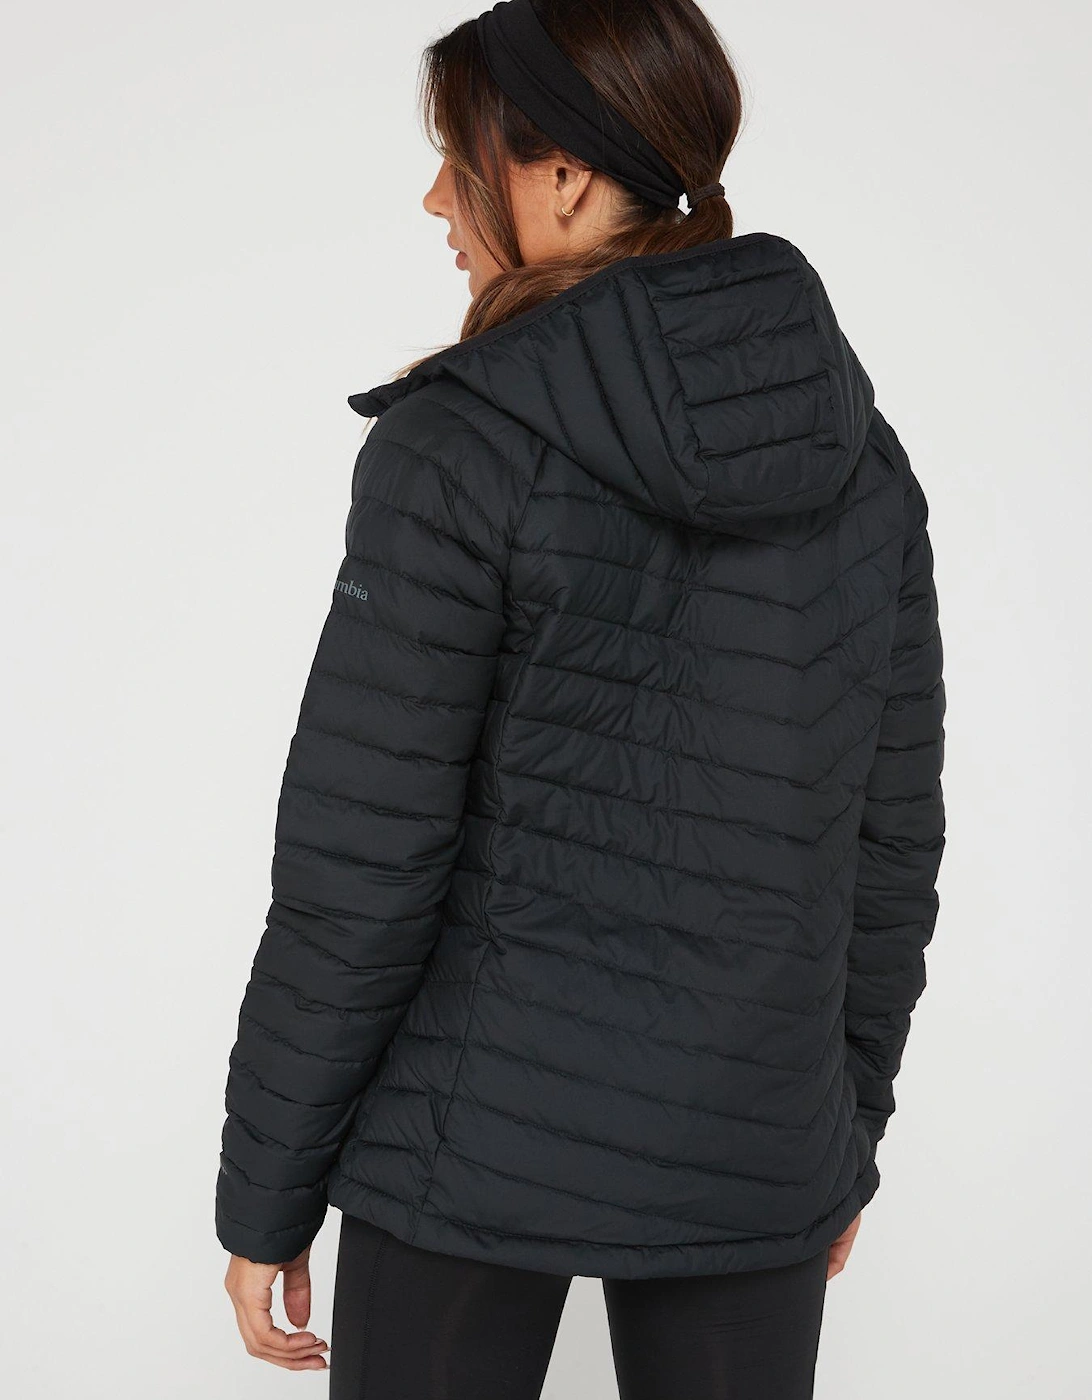 Women's Powder Lite Hooded Jacket - Black